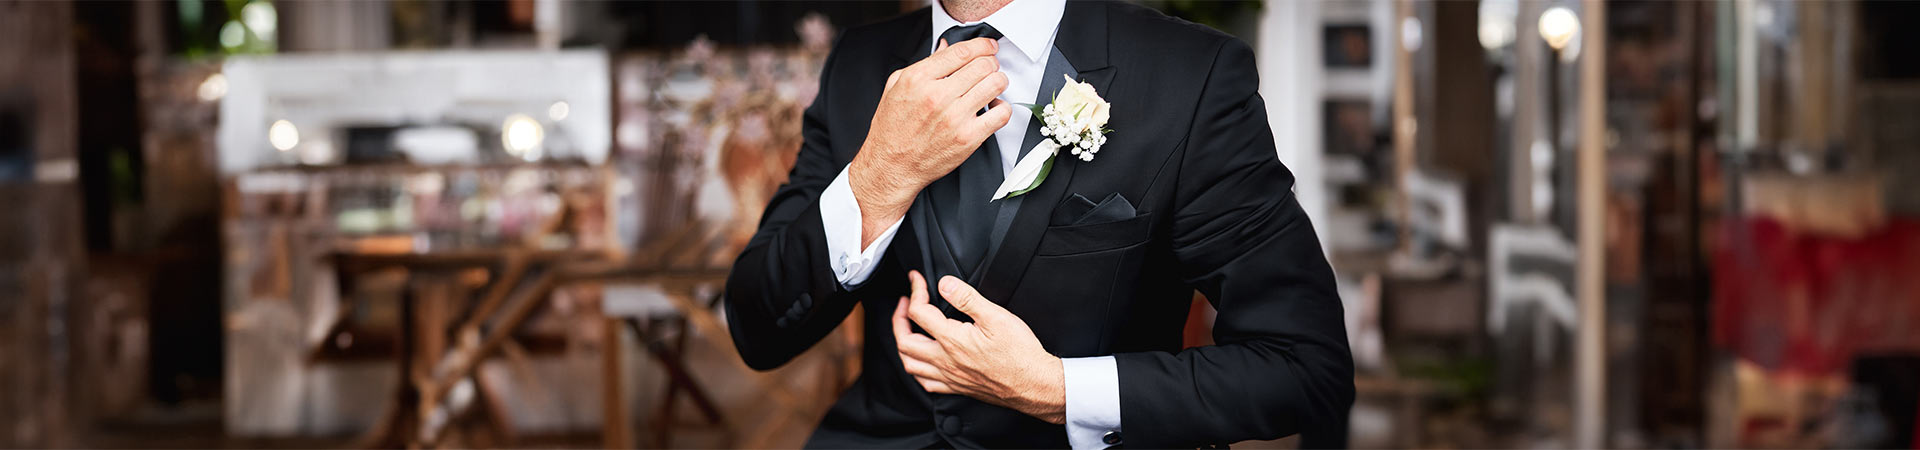 Wedding cravat